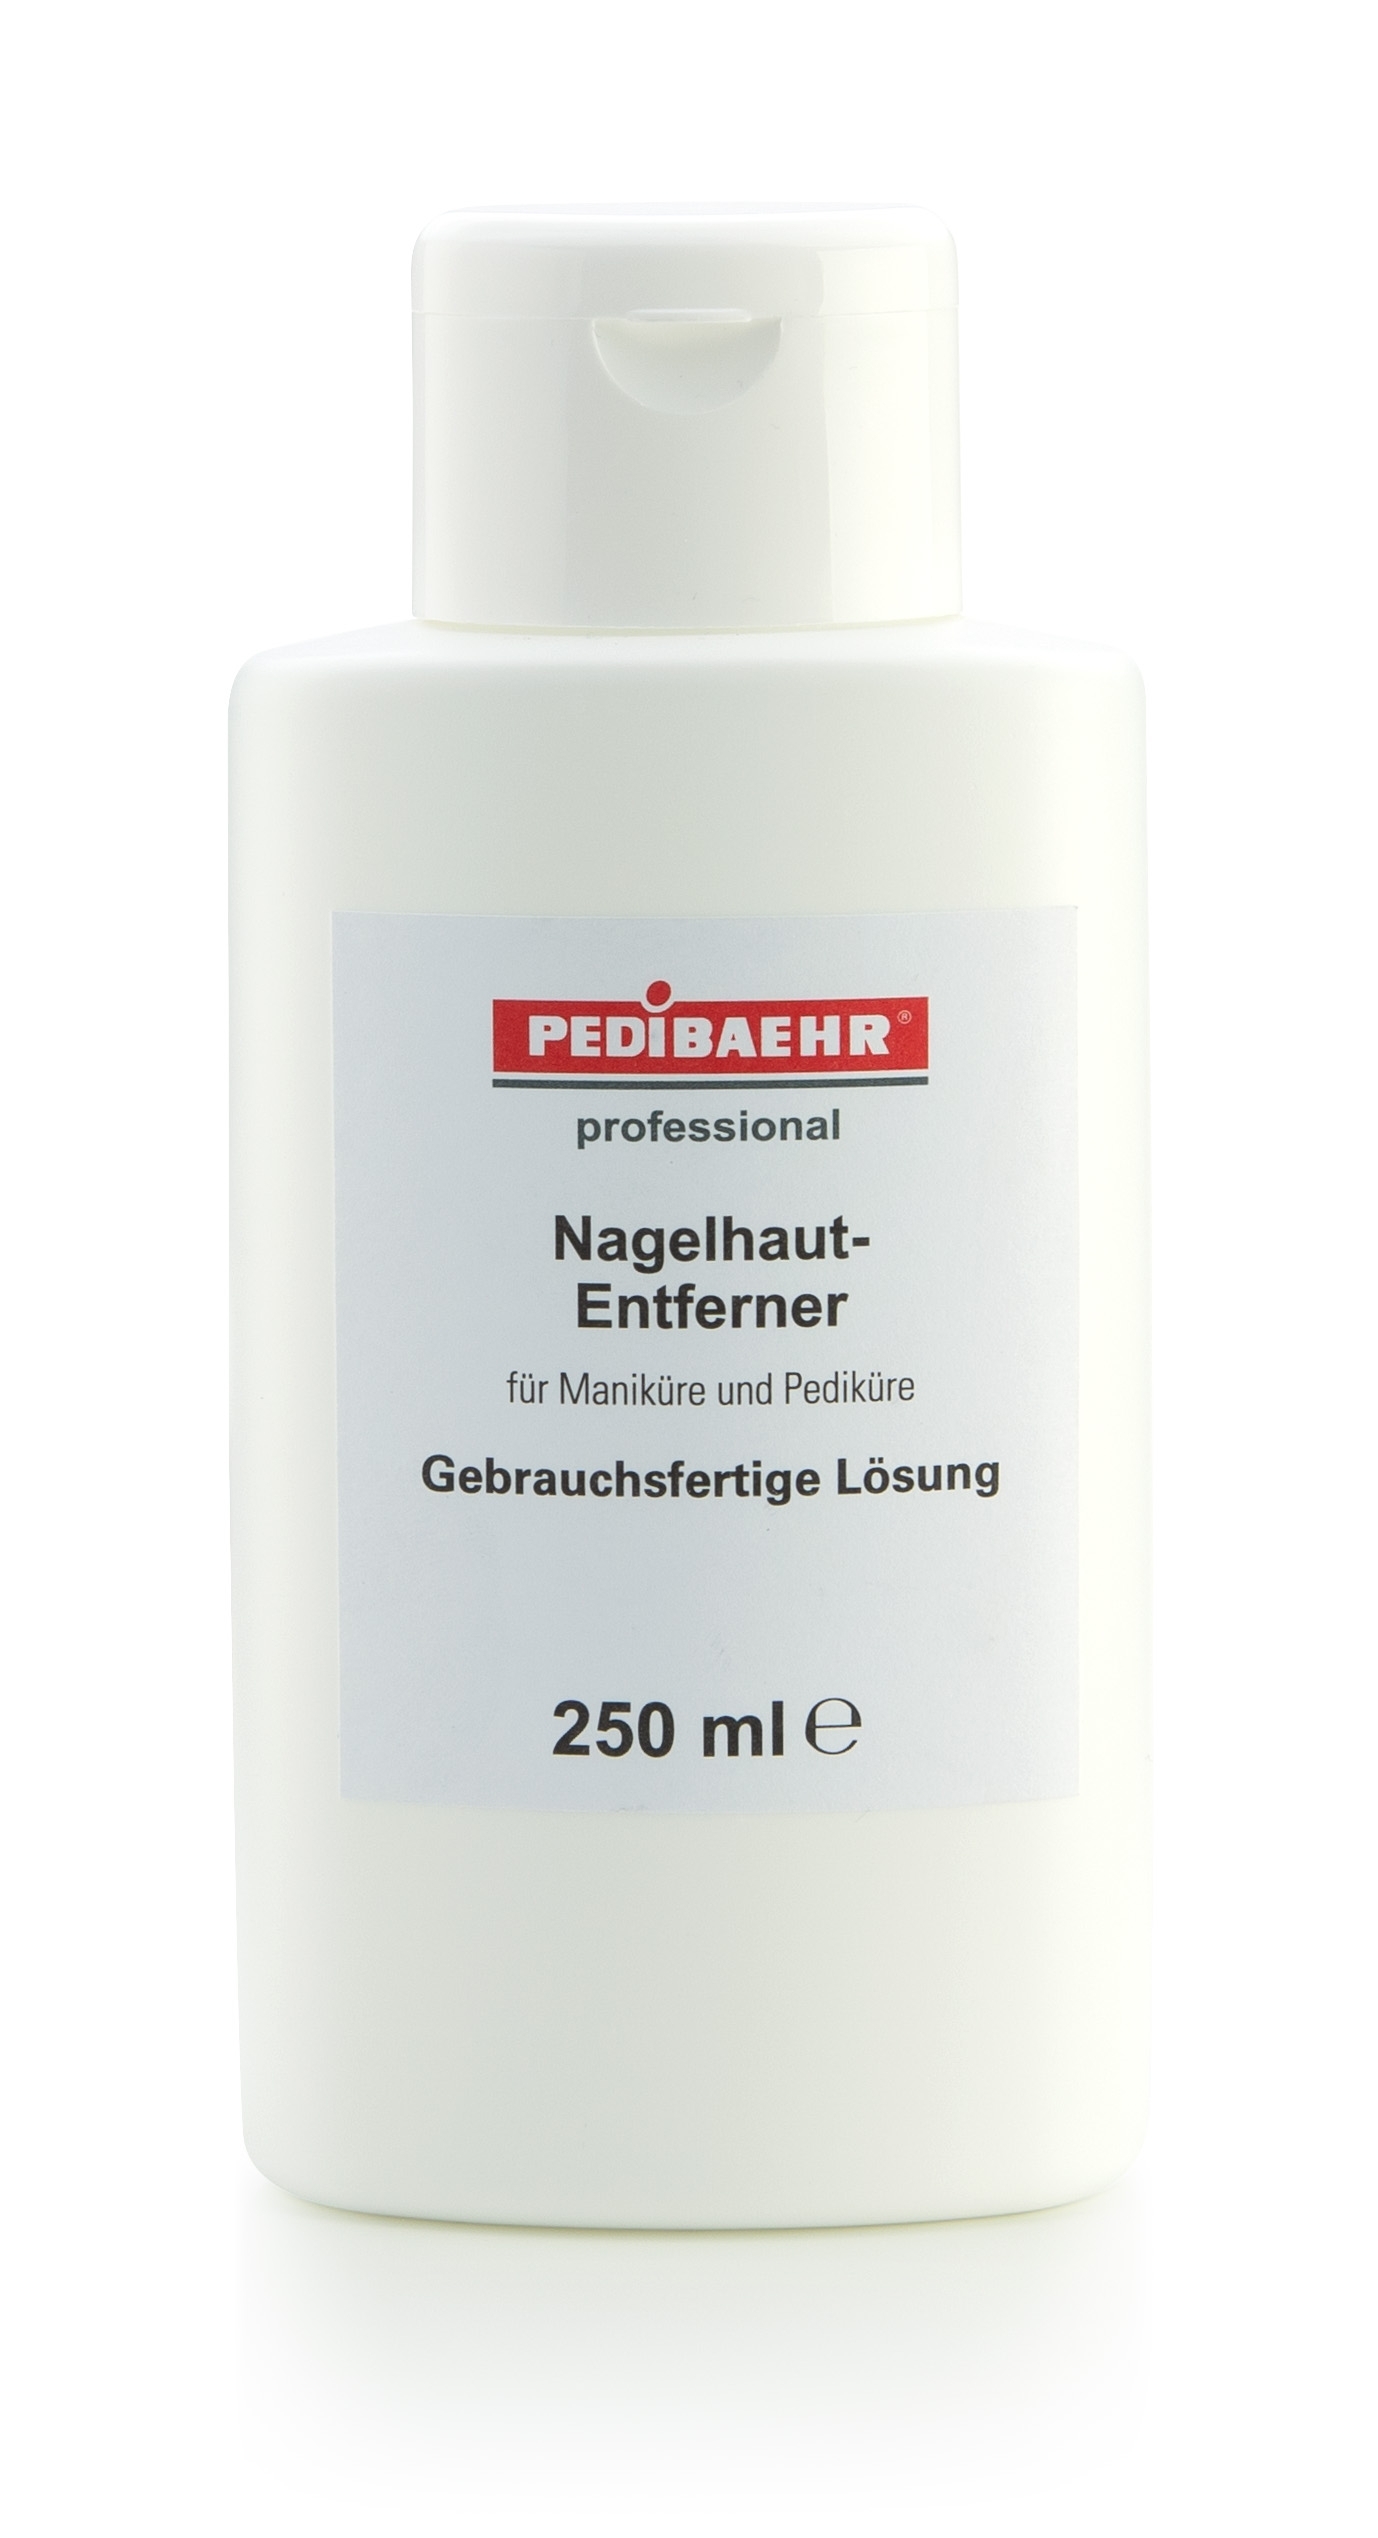 PEDIBAEHR Nagelhaut-Entferner 250 ml